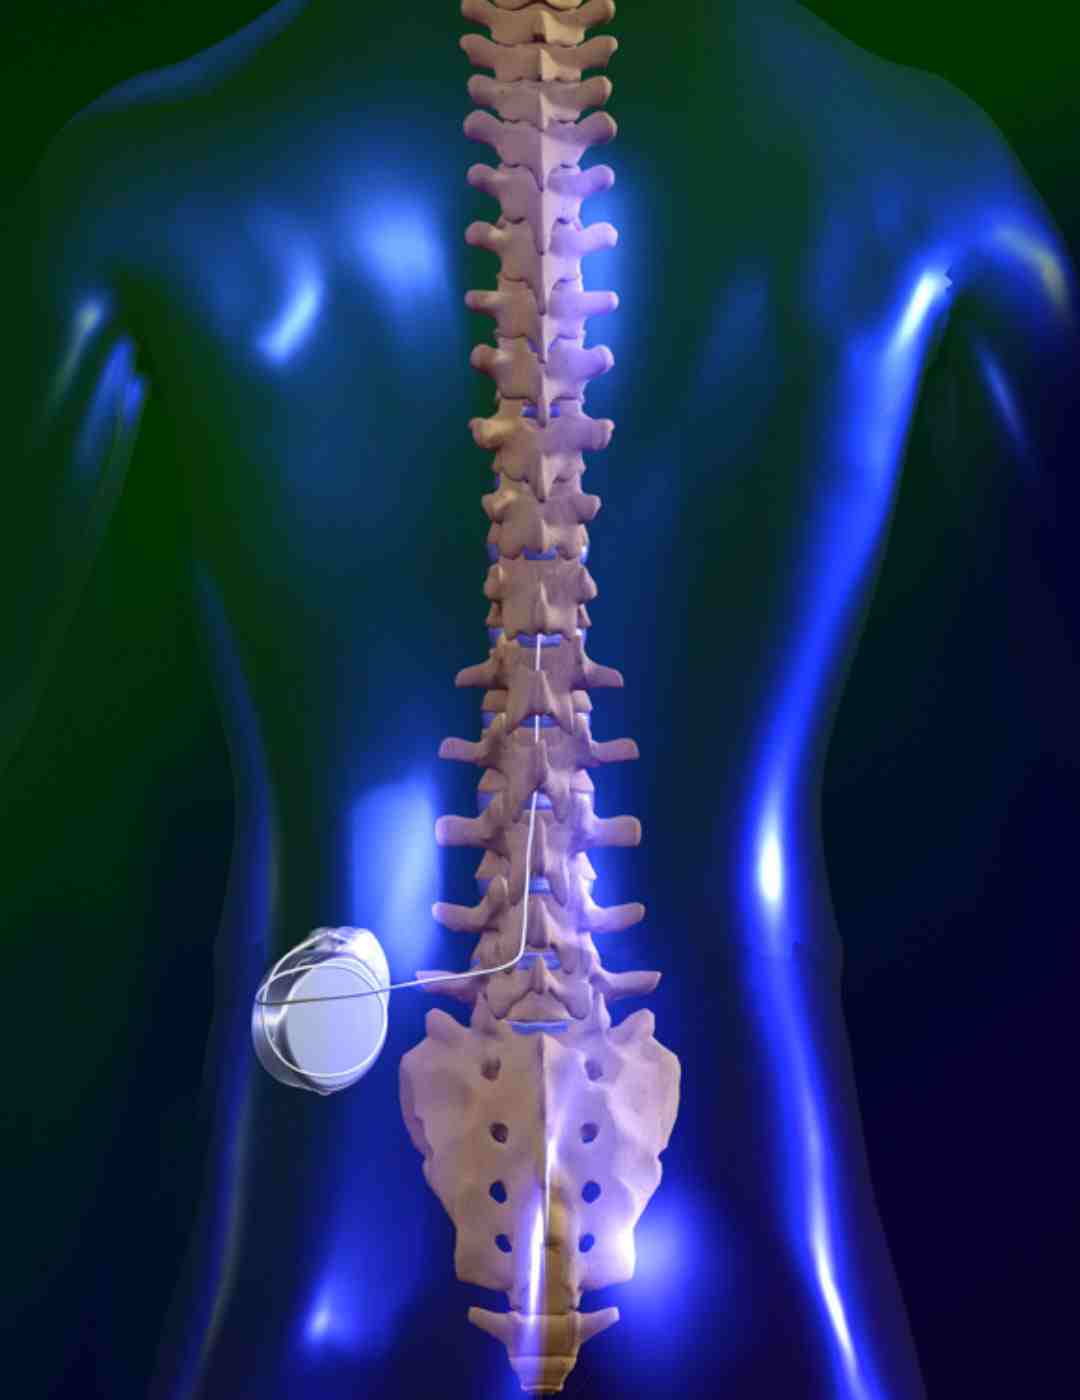 dorsal column stimulator complications